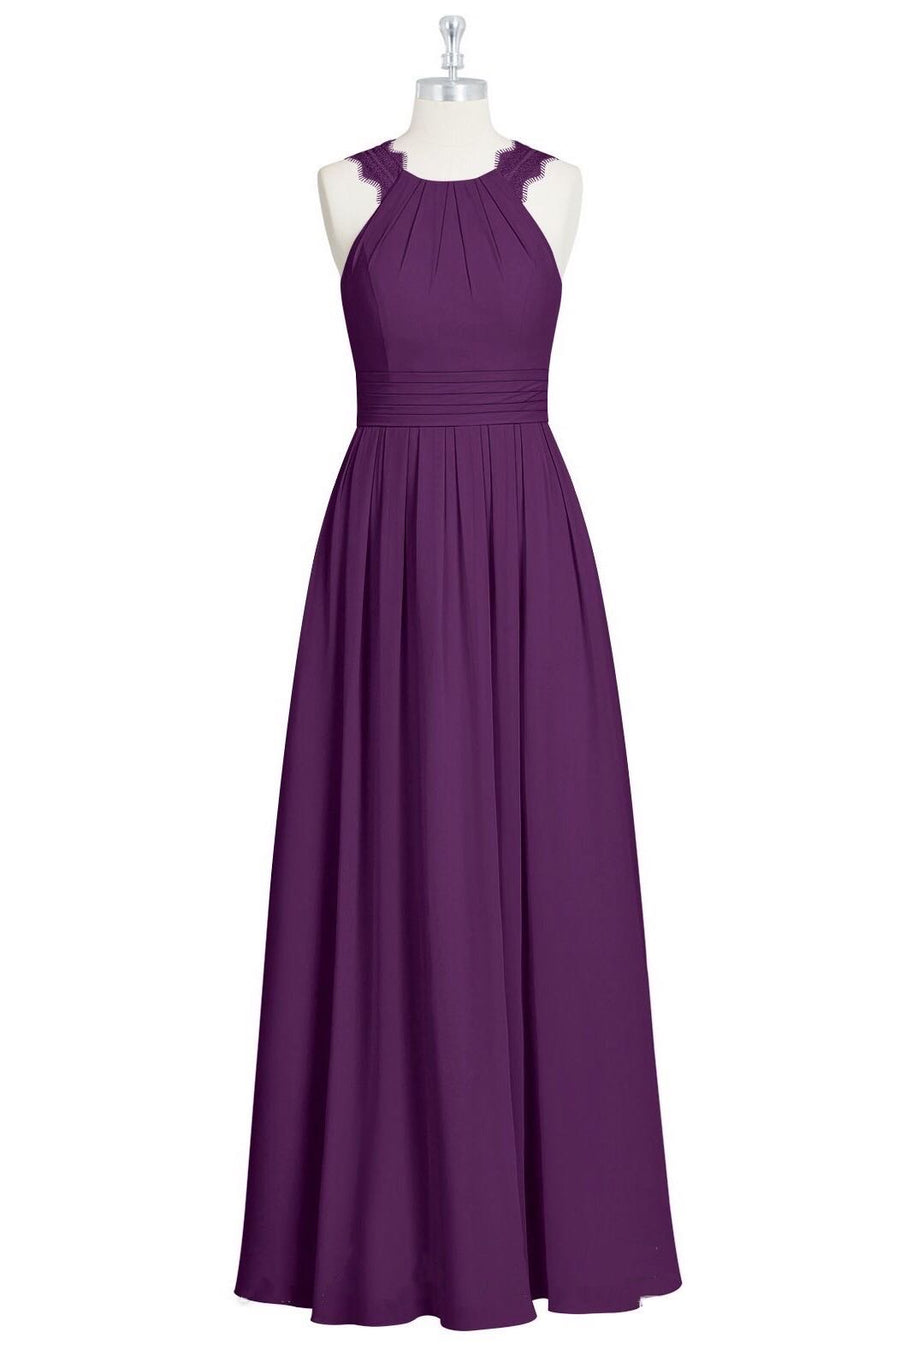 Purple Halter Backless A-line Gathered Bridesmaid Dress